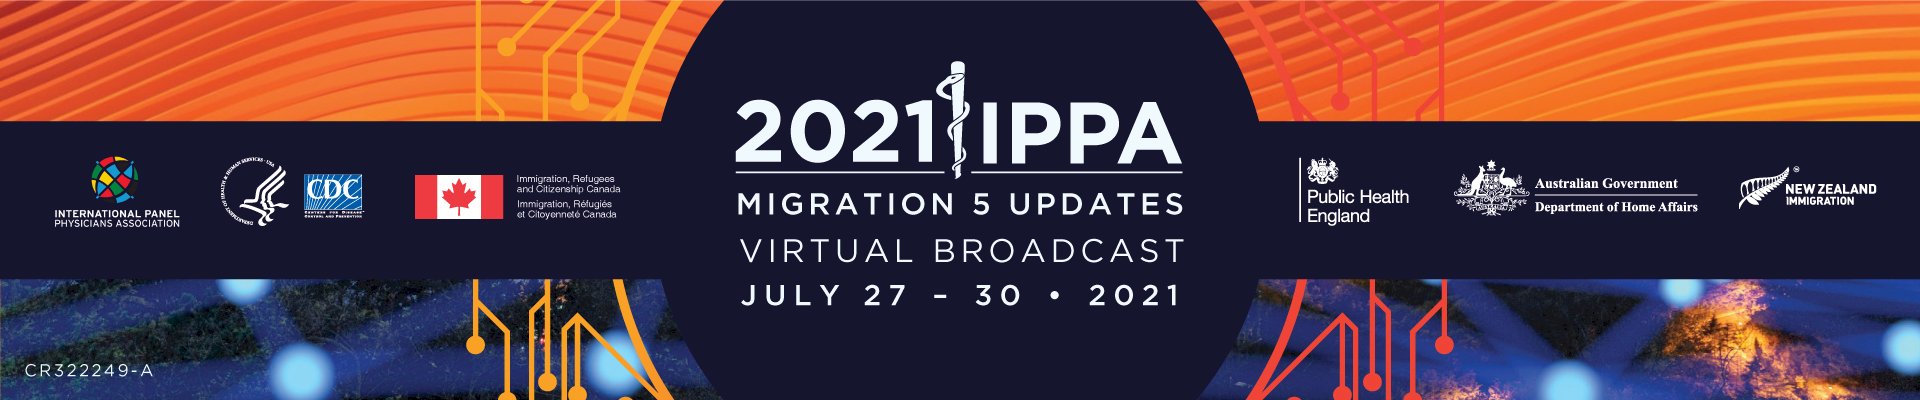 IPPA2021-banner.jpg